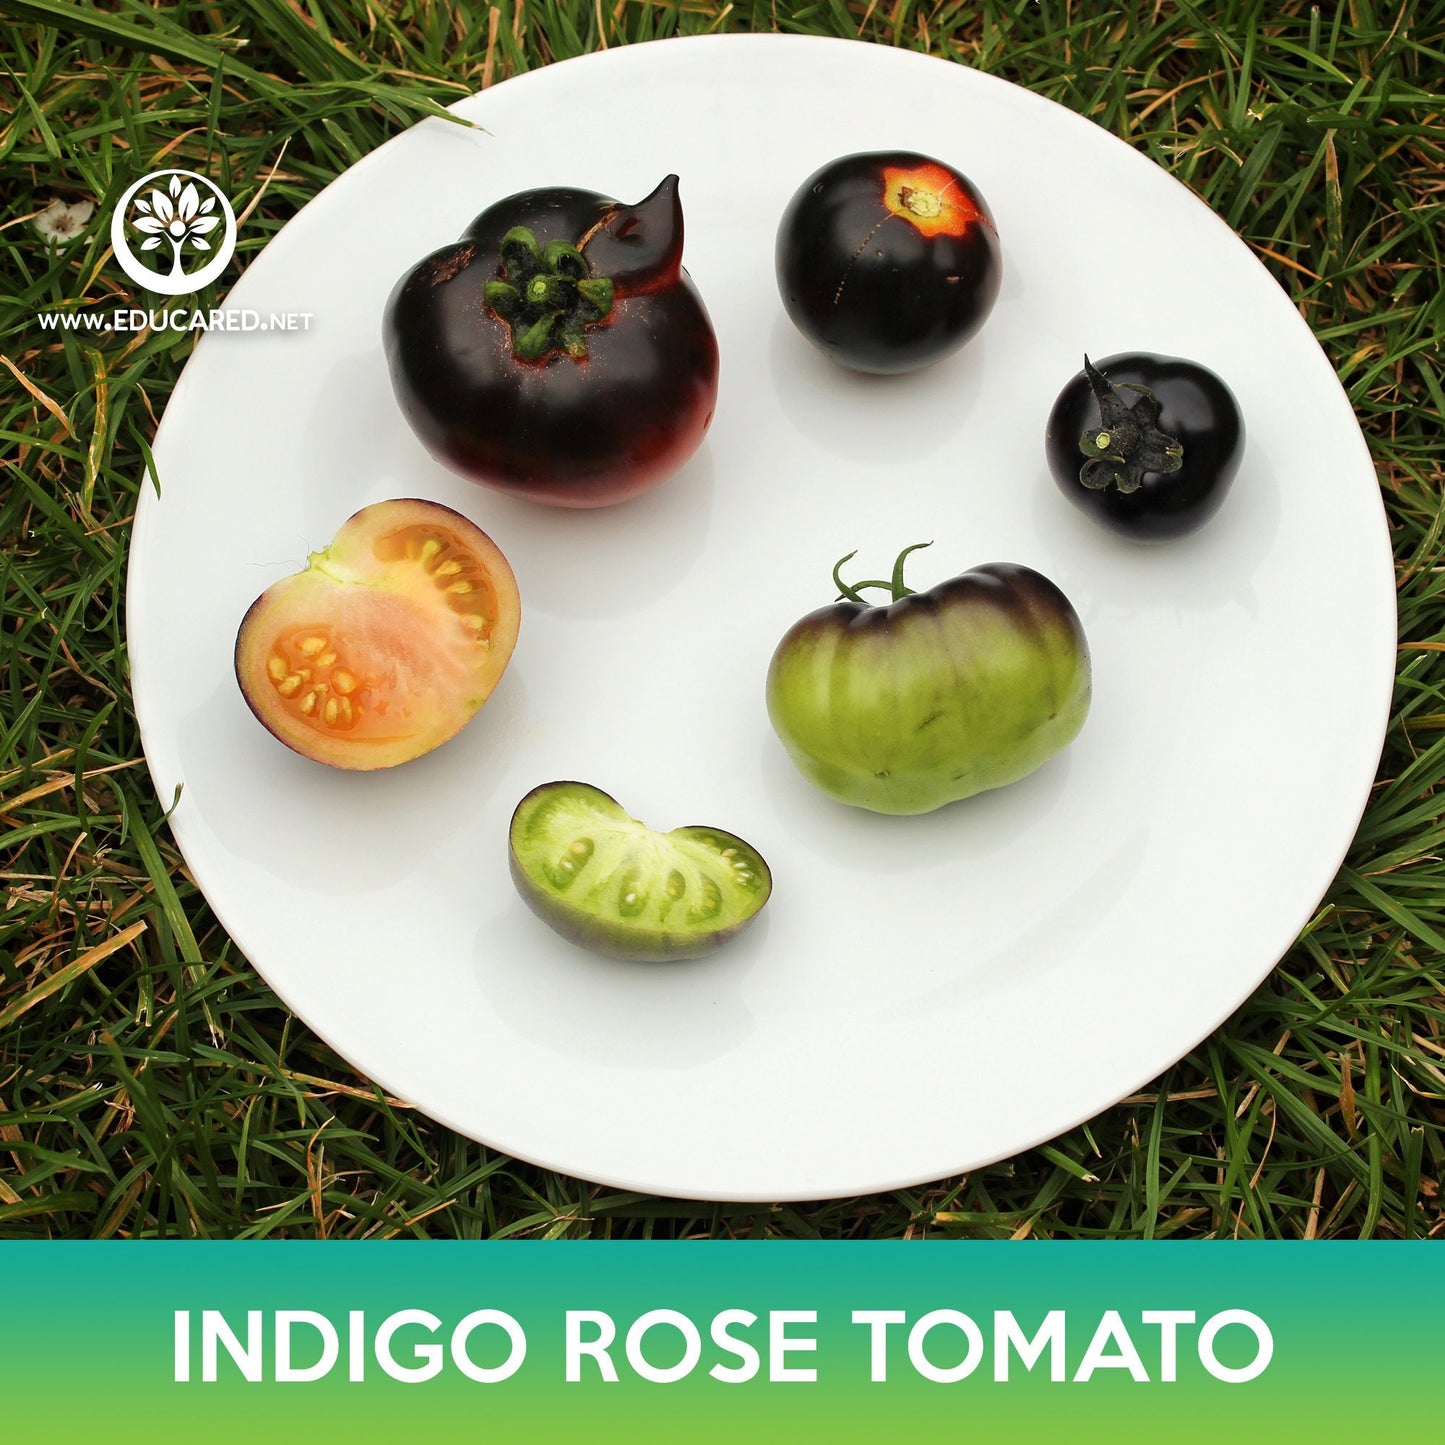 Indigo Rose Tomato, Blue Tomato, Purple Tomato, Lycopersicon esculentum Indigo Rose